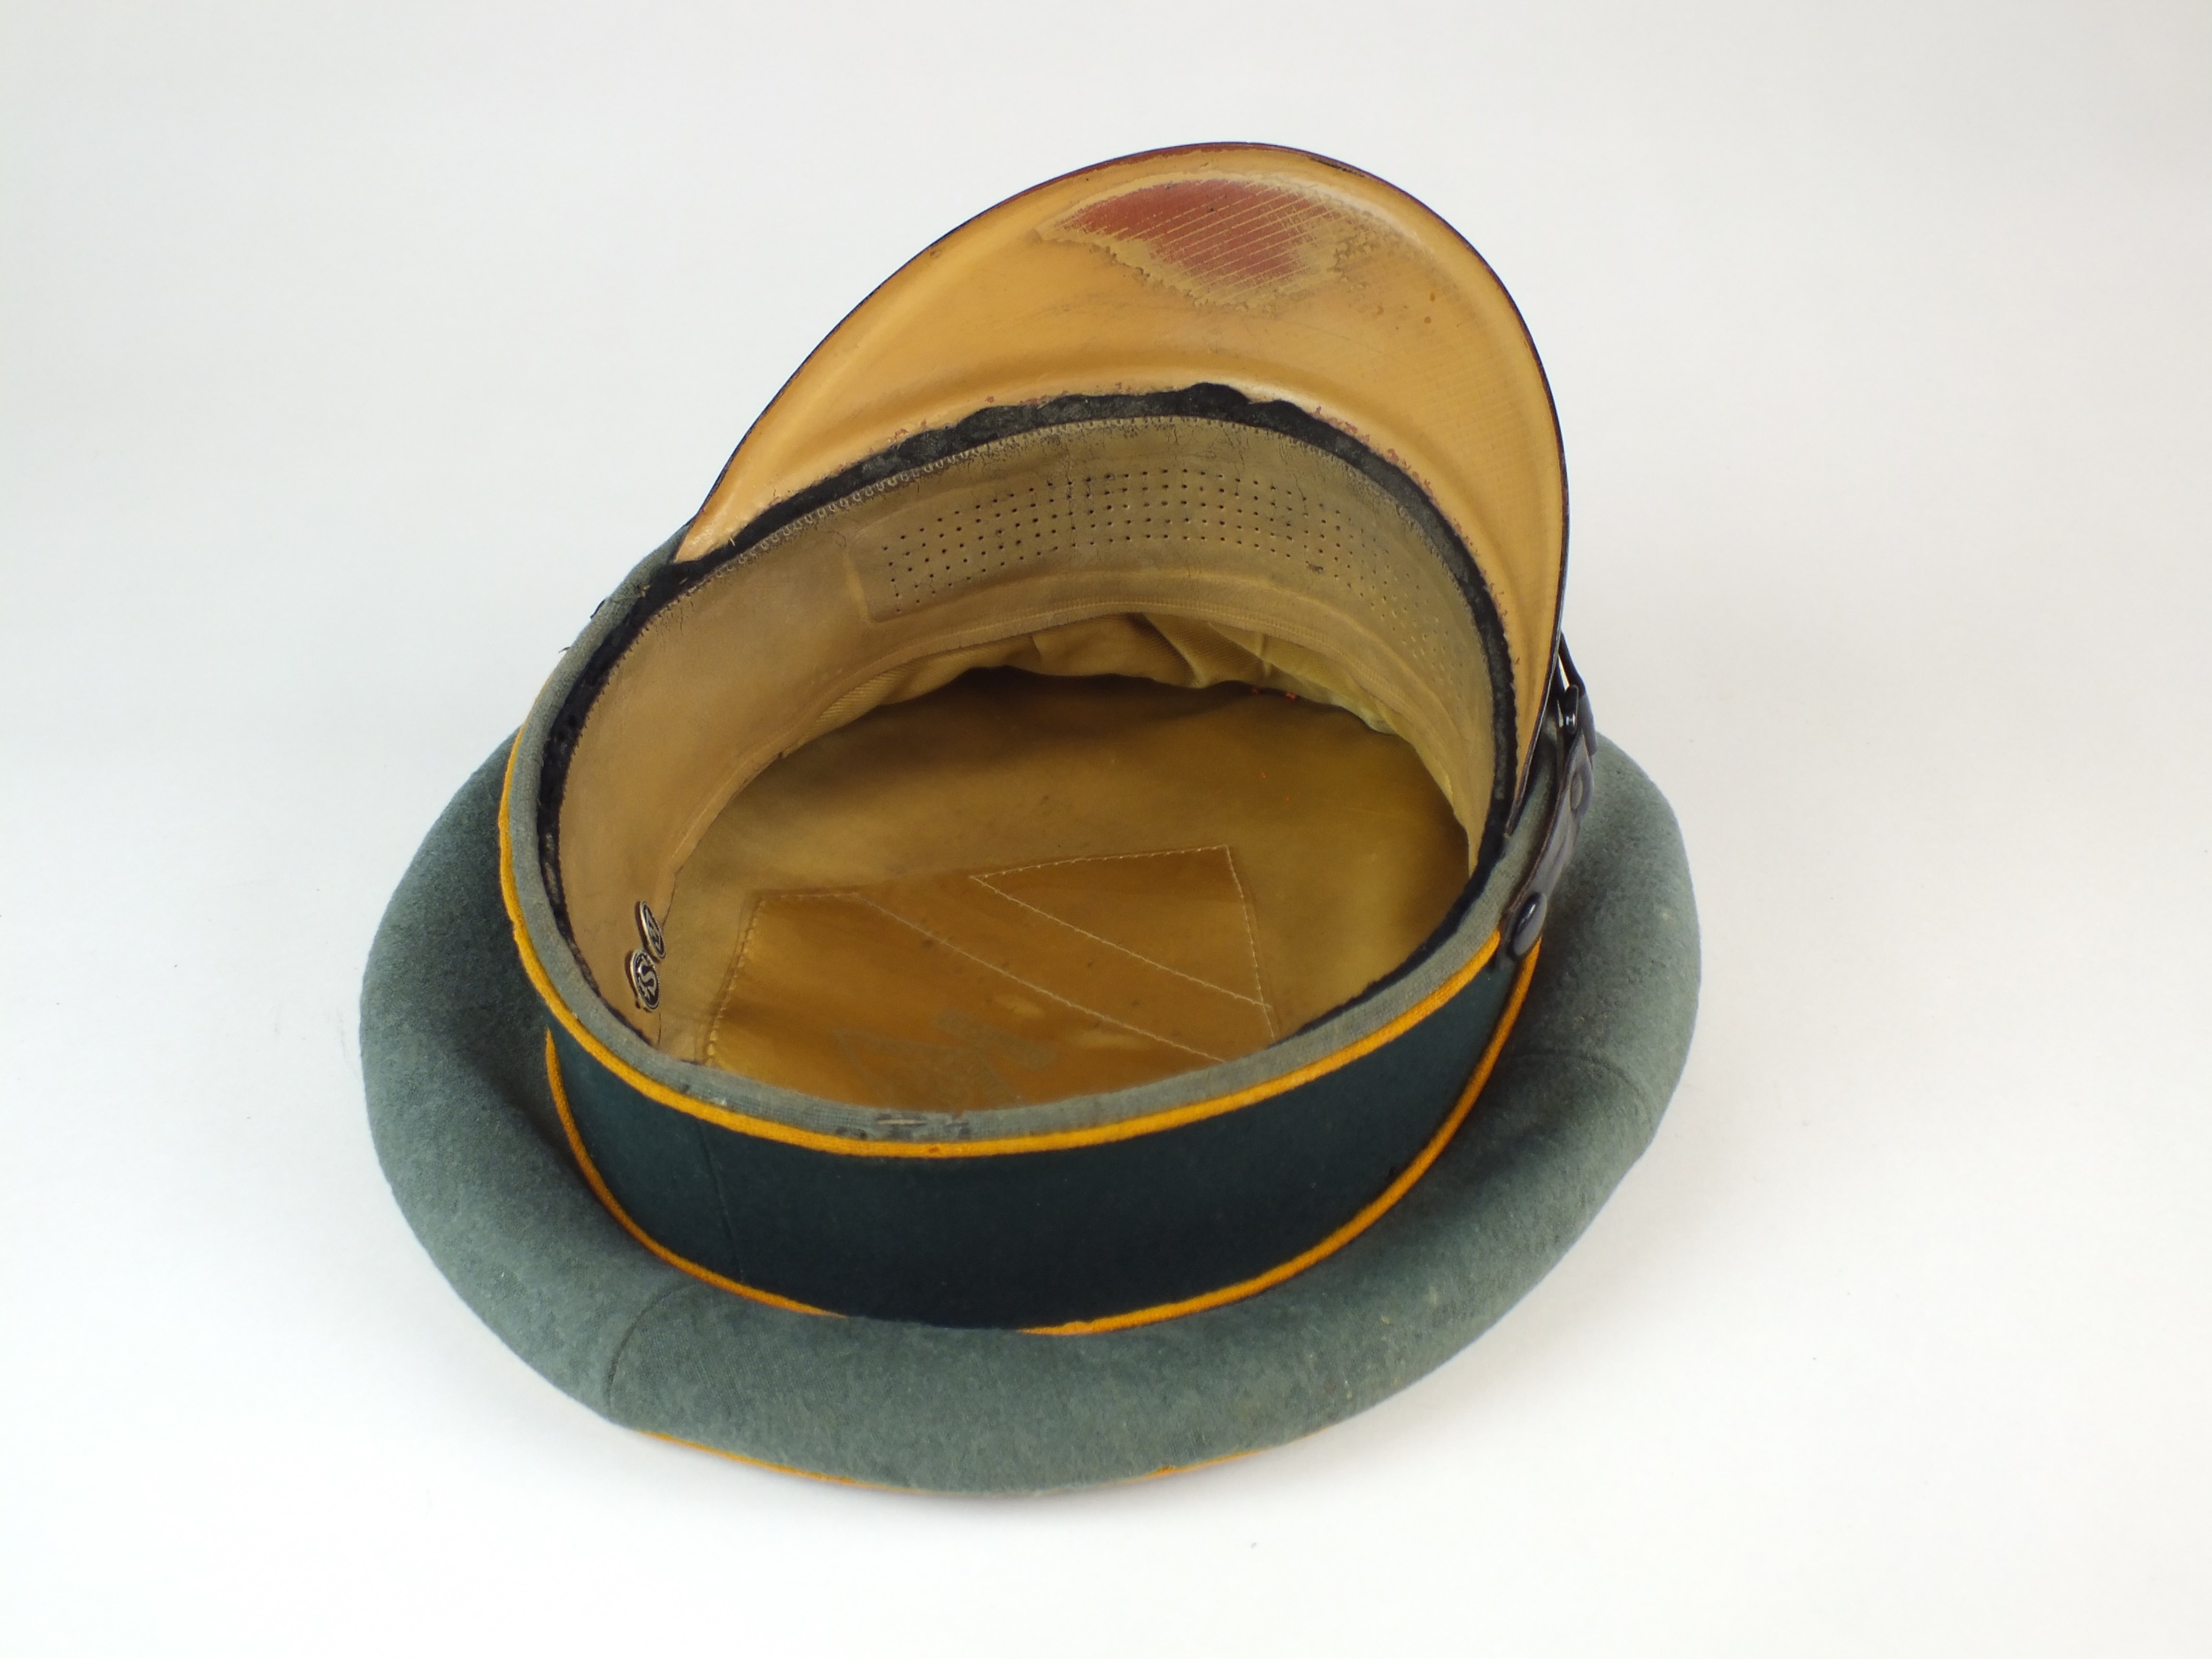 German Army Cavalry NCO's visor cap by Erel - Image 6 of 7